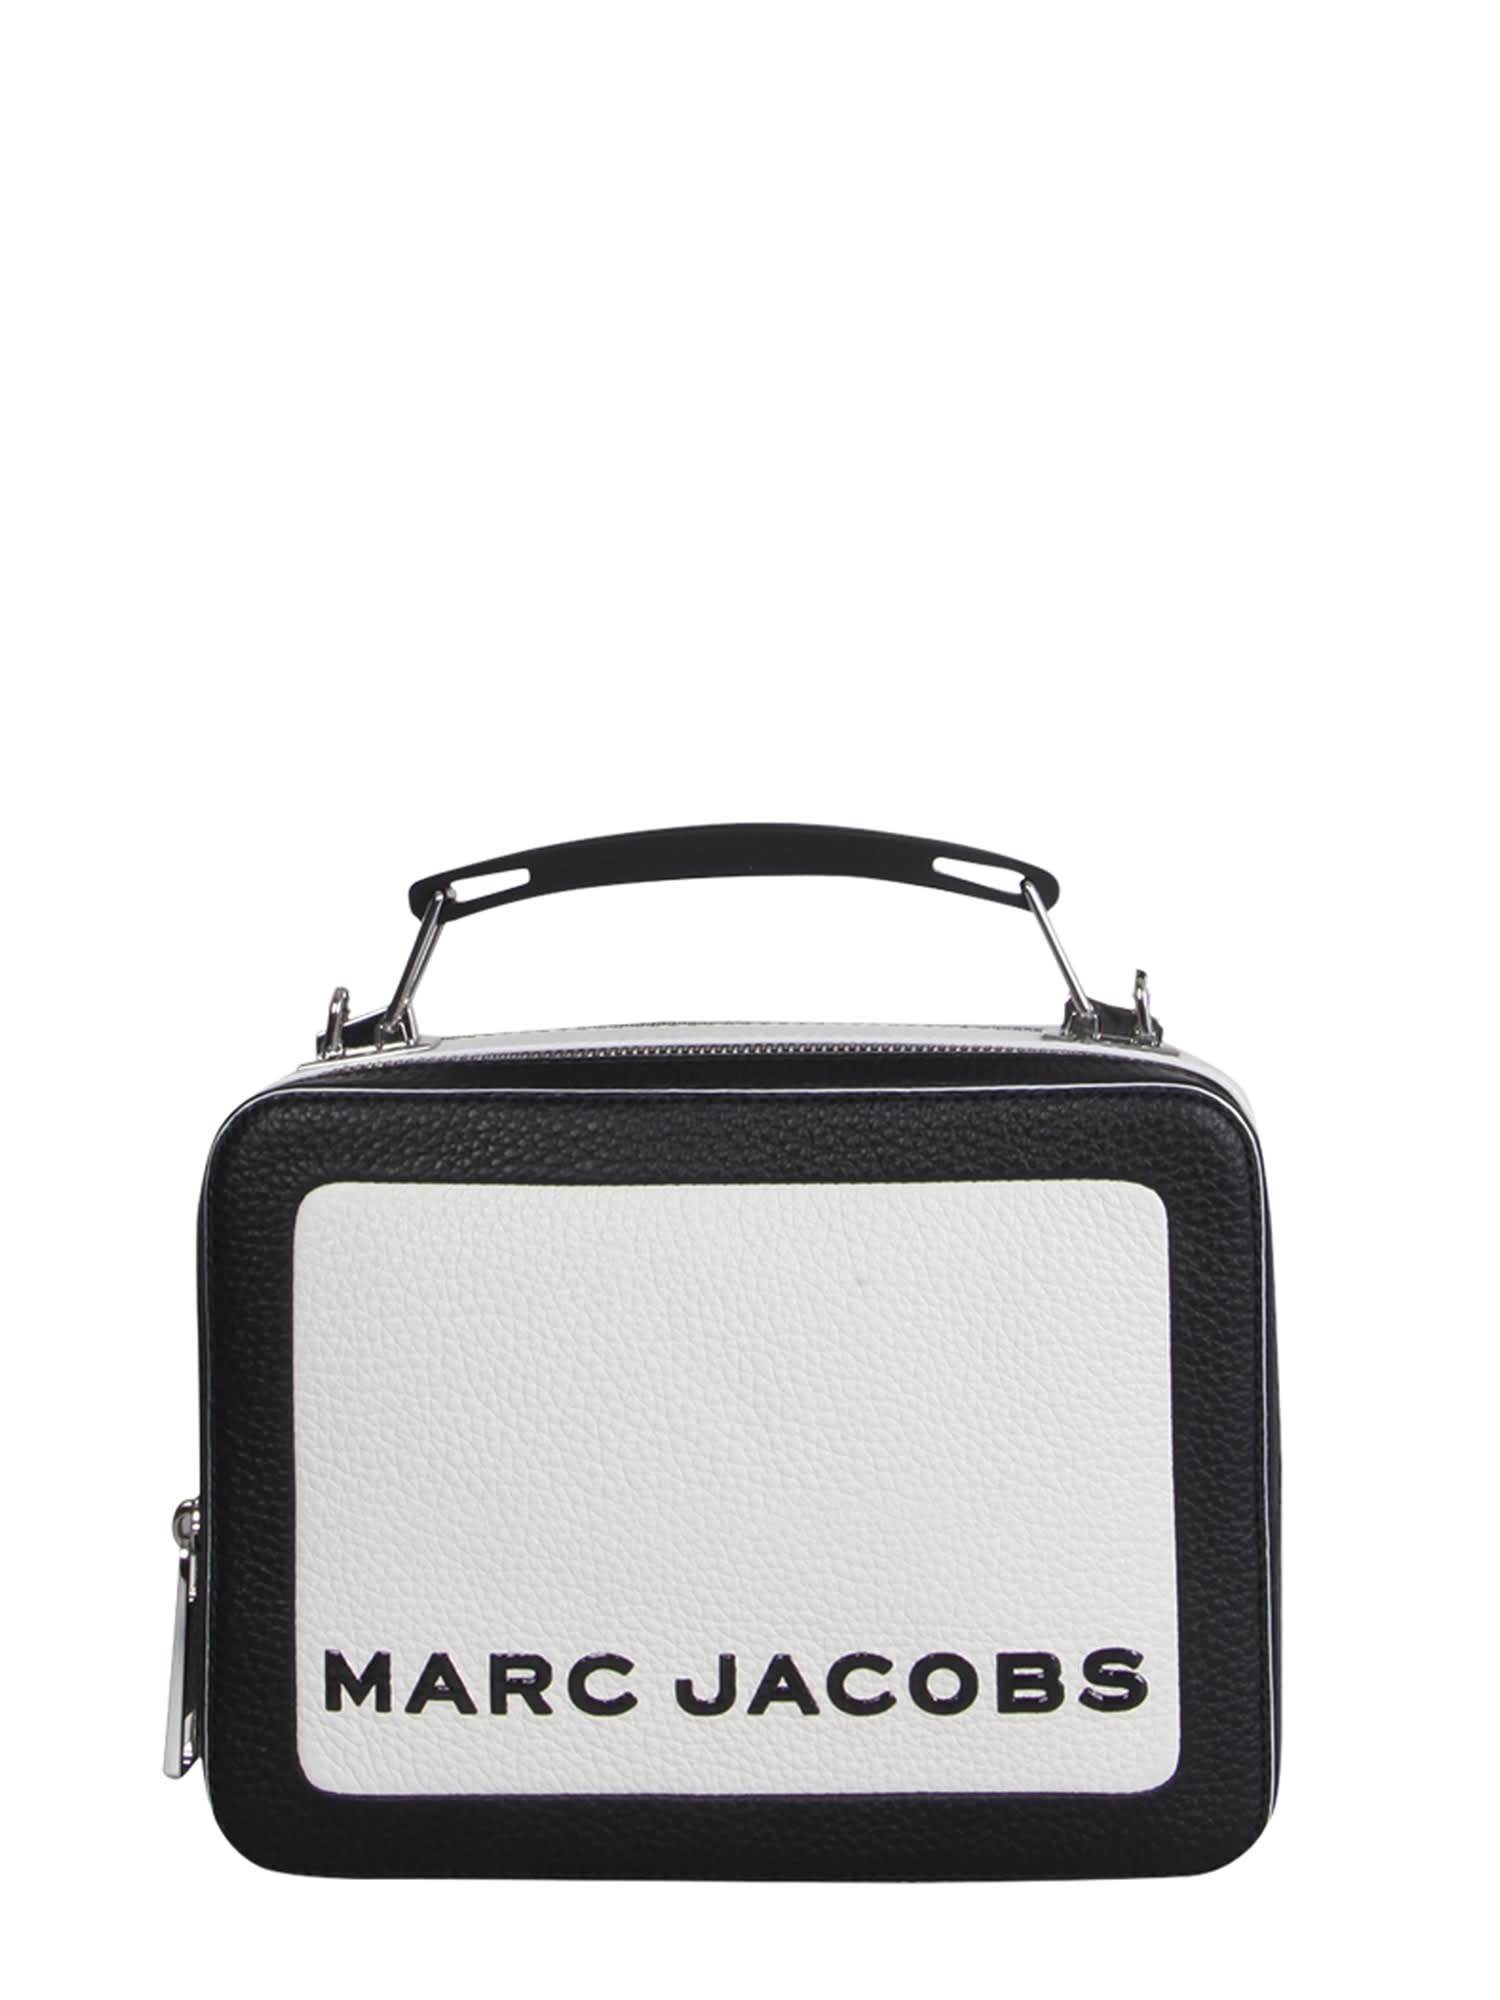 Marc Jacobs The Box 23 Bag